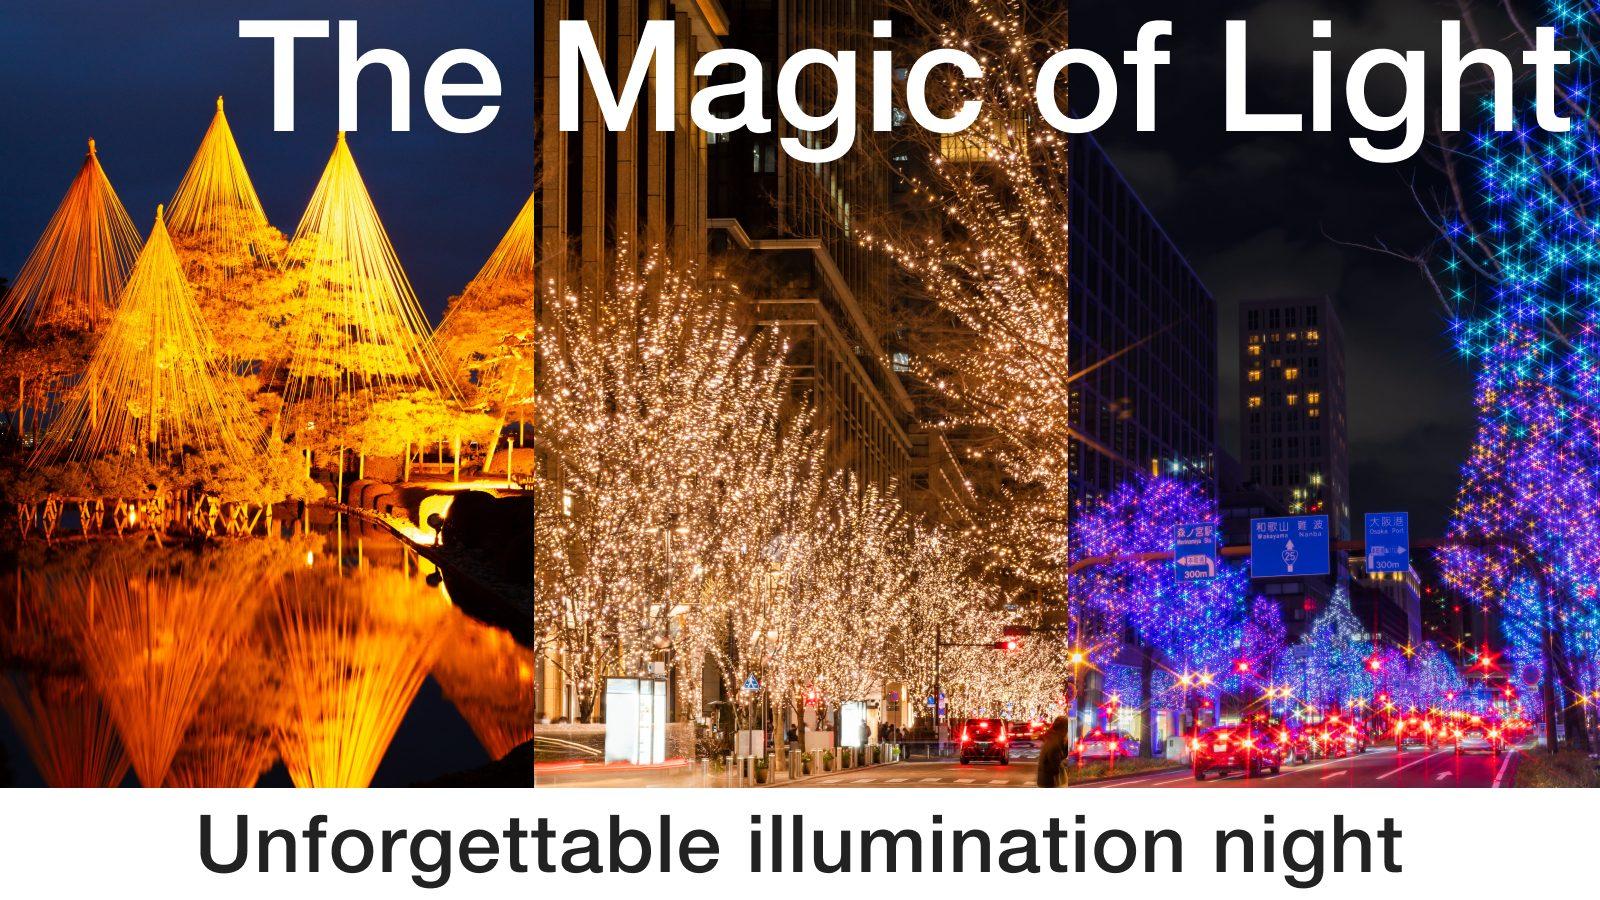 【The Magic of Light】The unforgettable illumination night